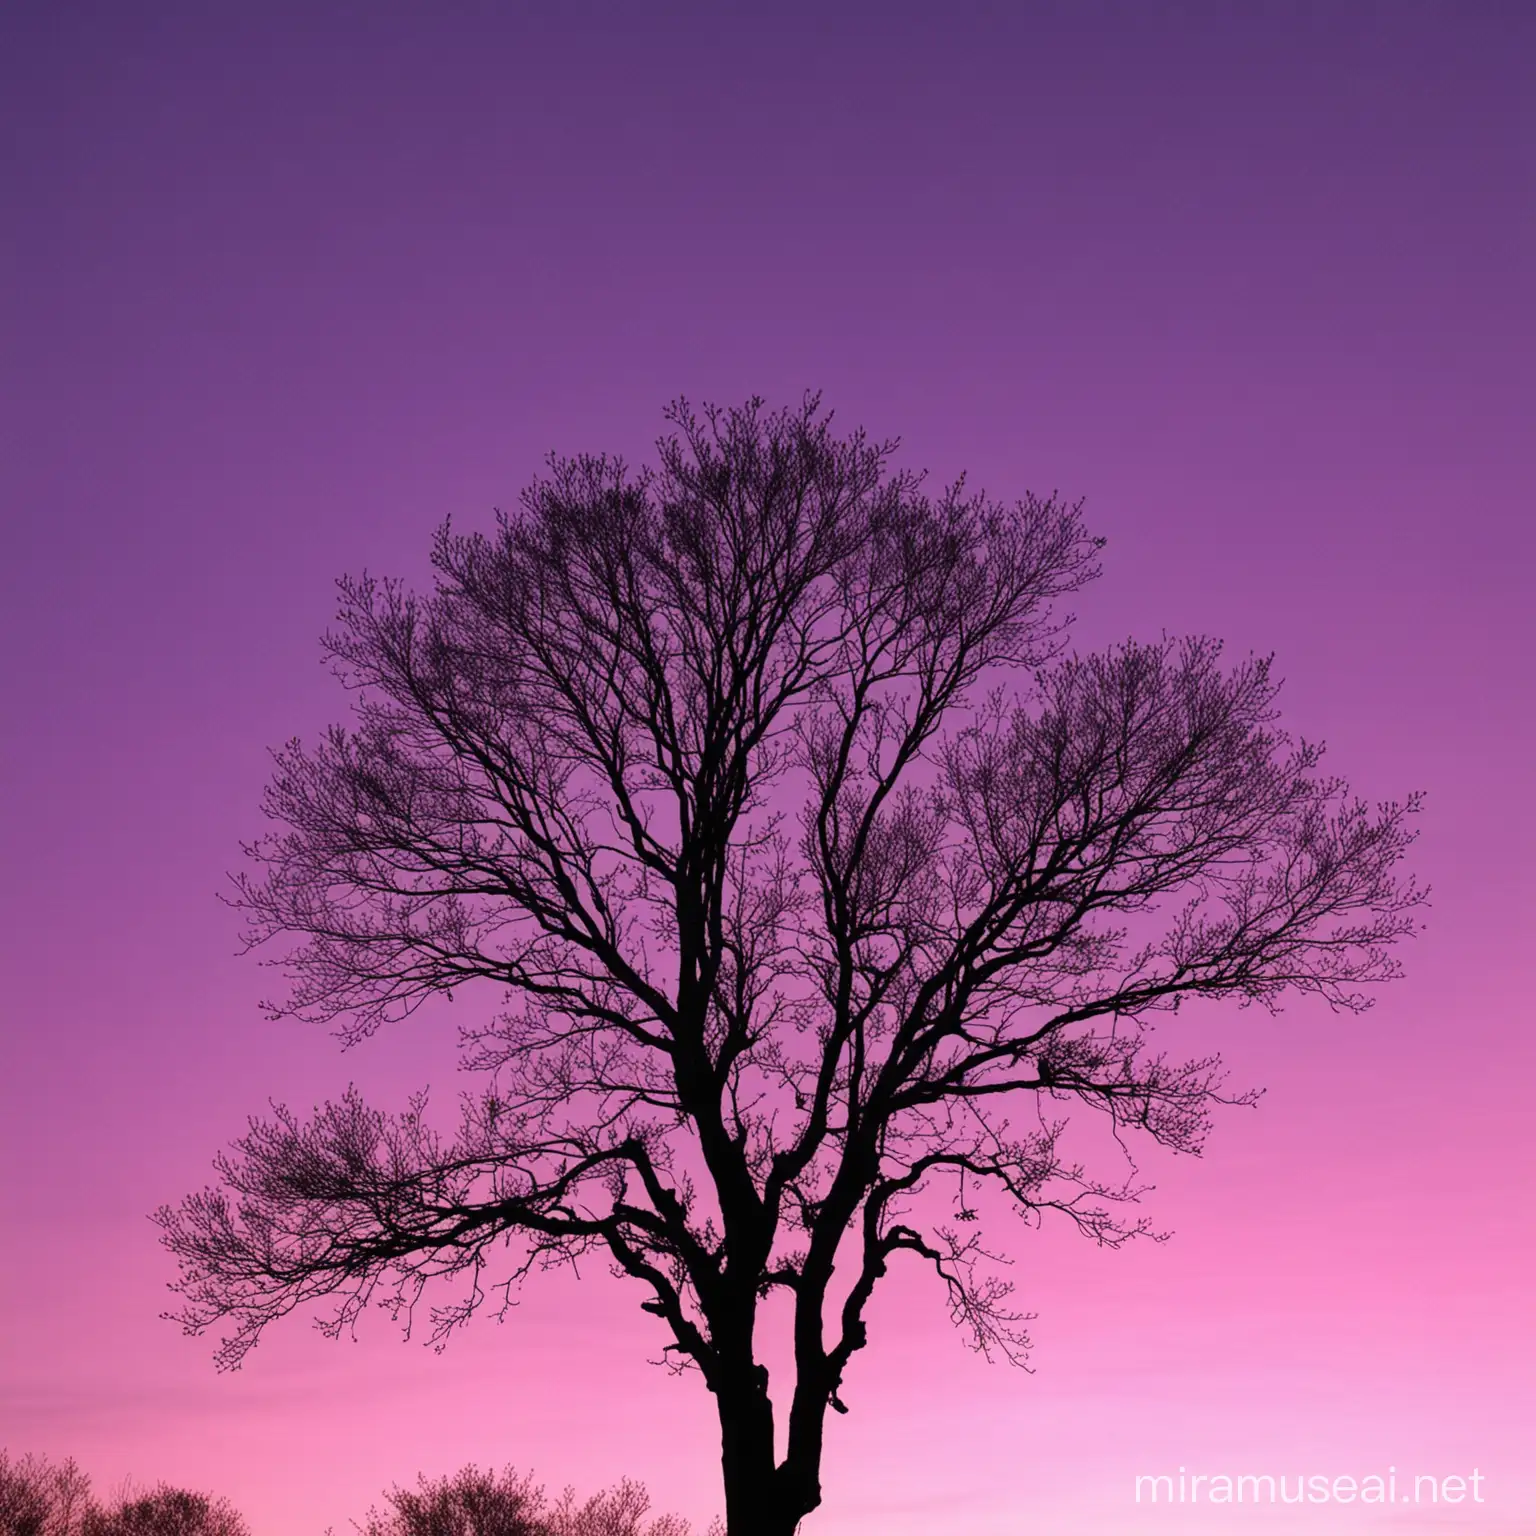 Purple pinky  sky and tree silhouette 